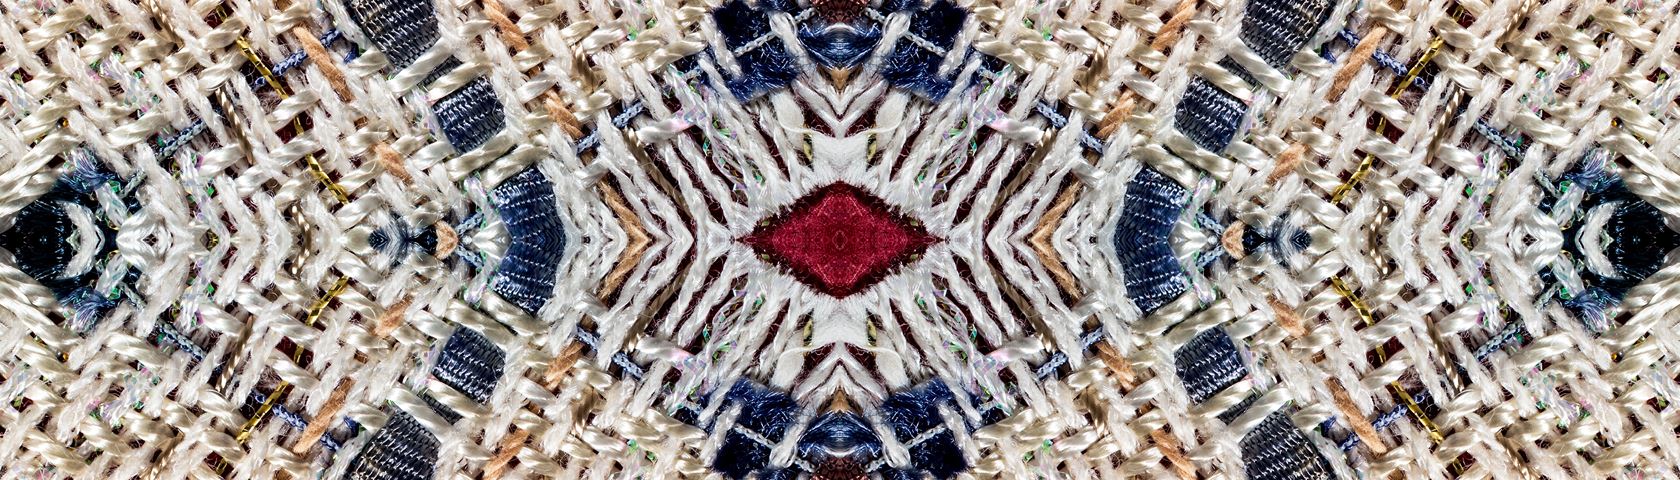 Handwoven Fabric in Symmetrical Arrangement